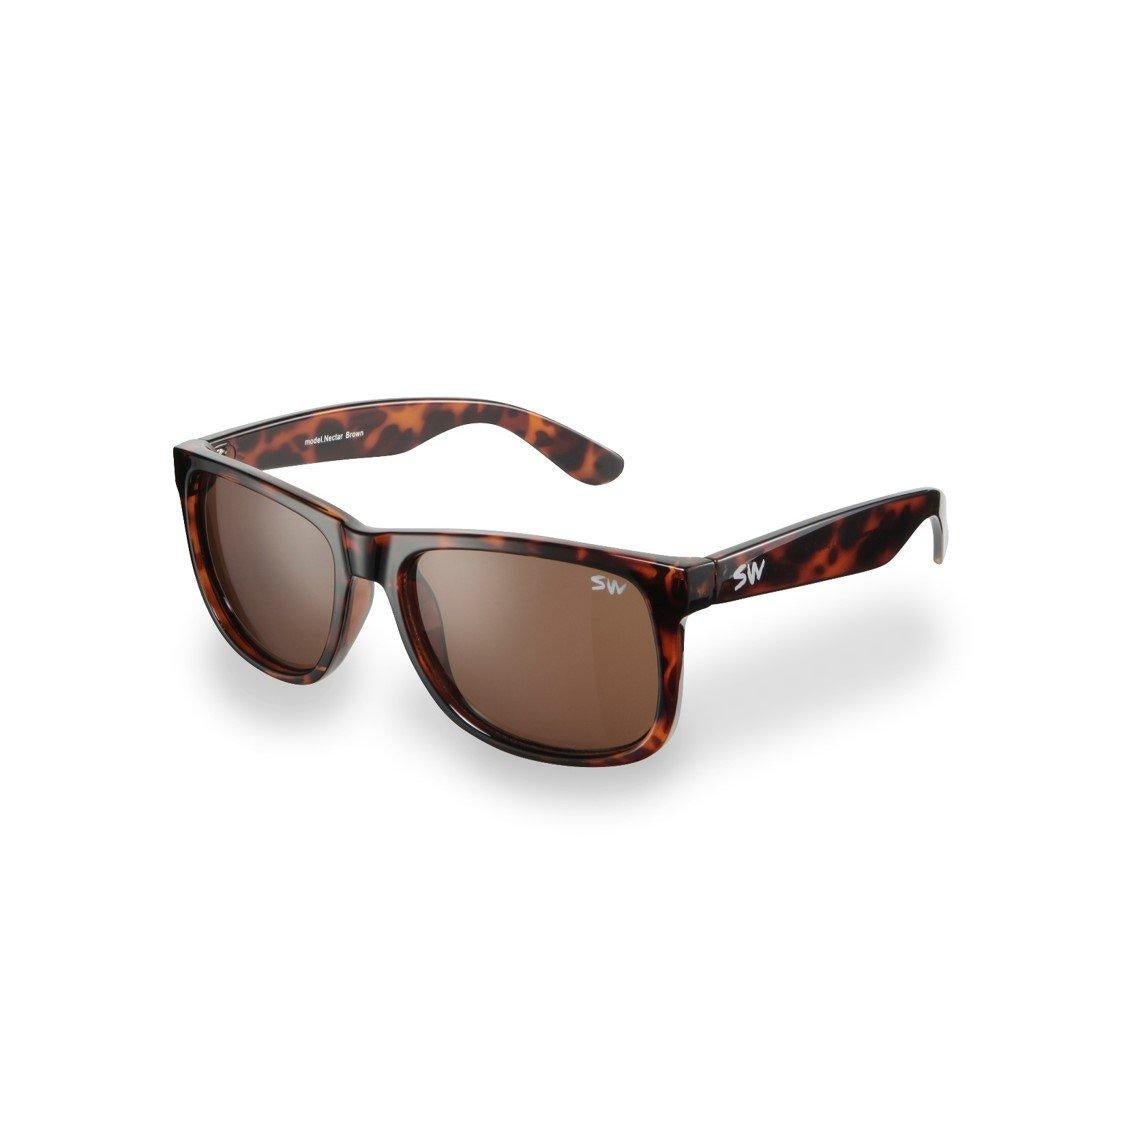 Sunwise Nectar Brown Lifestyle Sunglasses